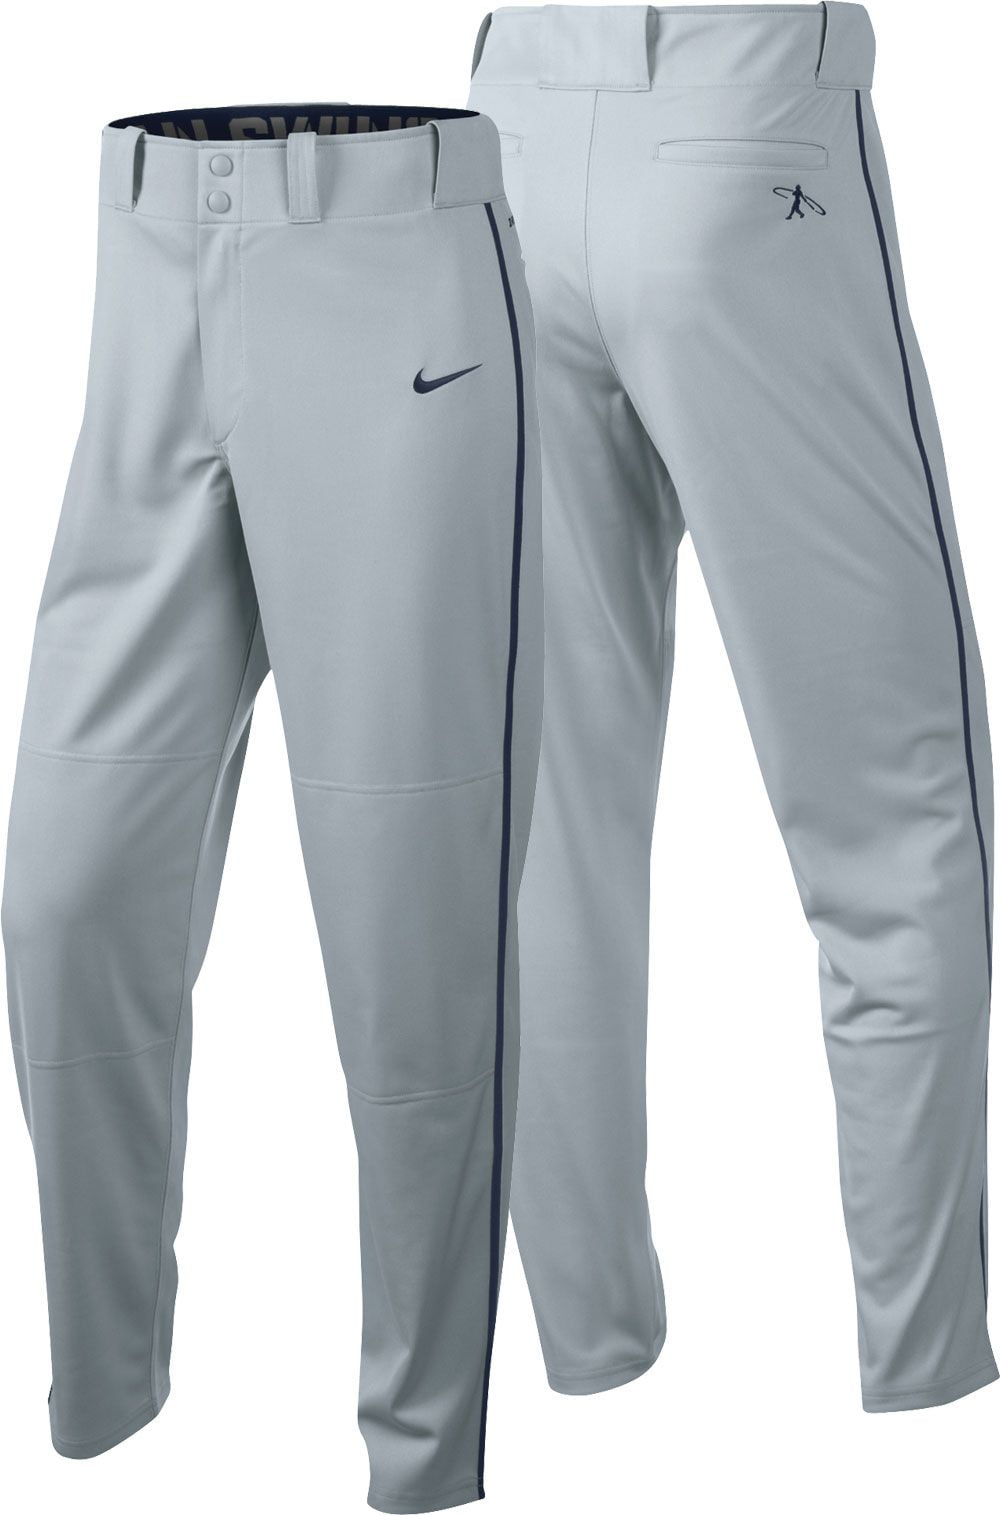 Download nike men's swingman dri-fit piped baseball pants - Walmart ...